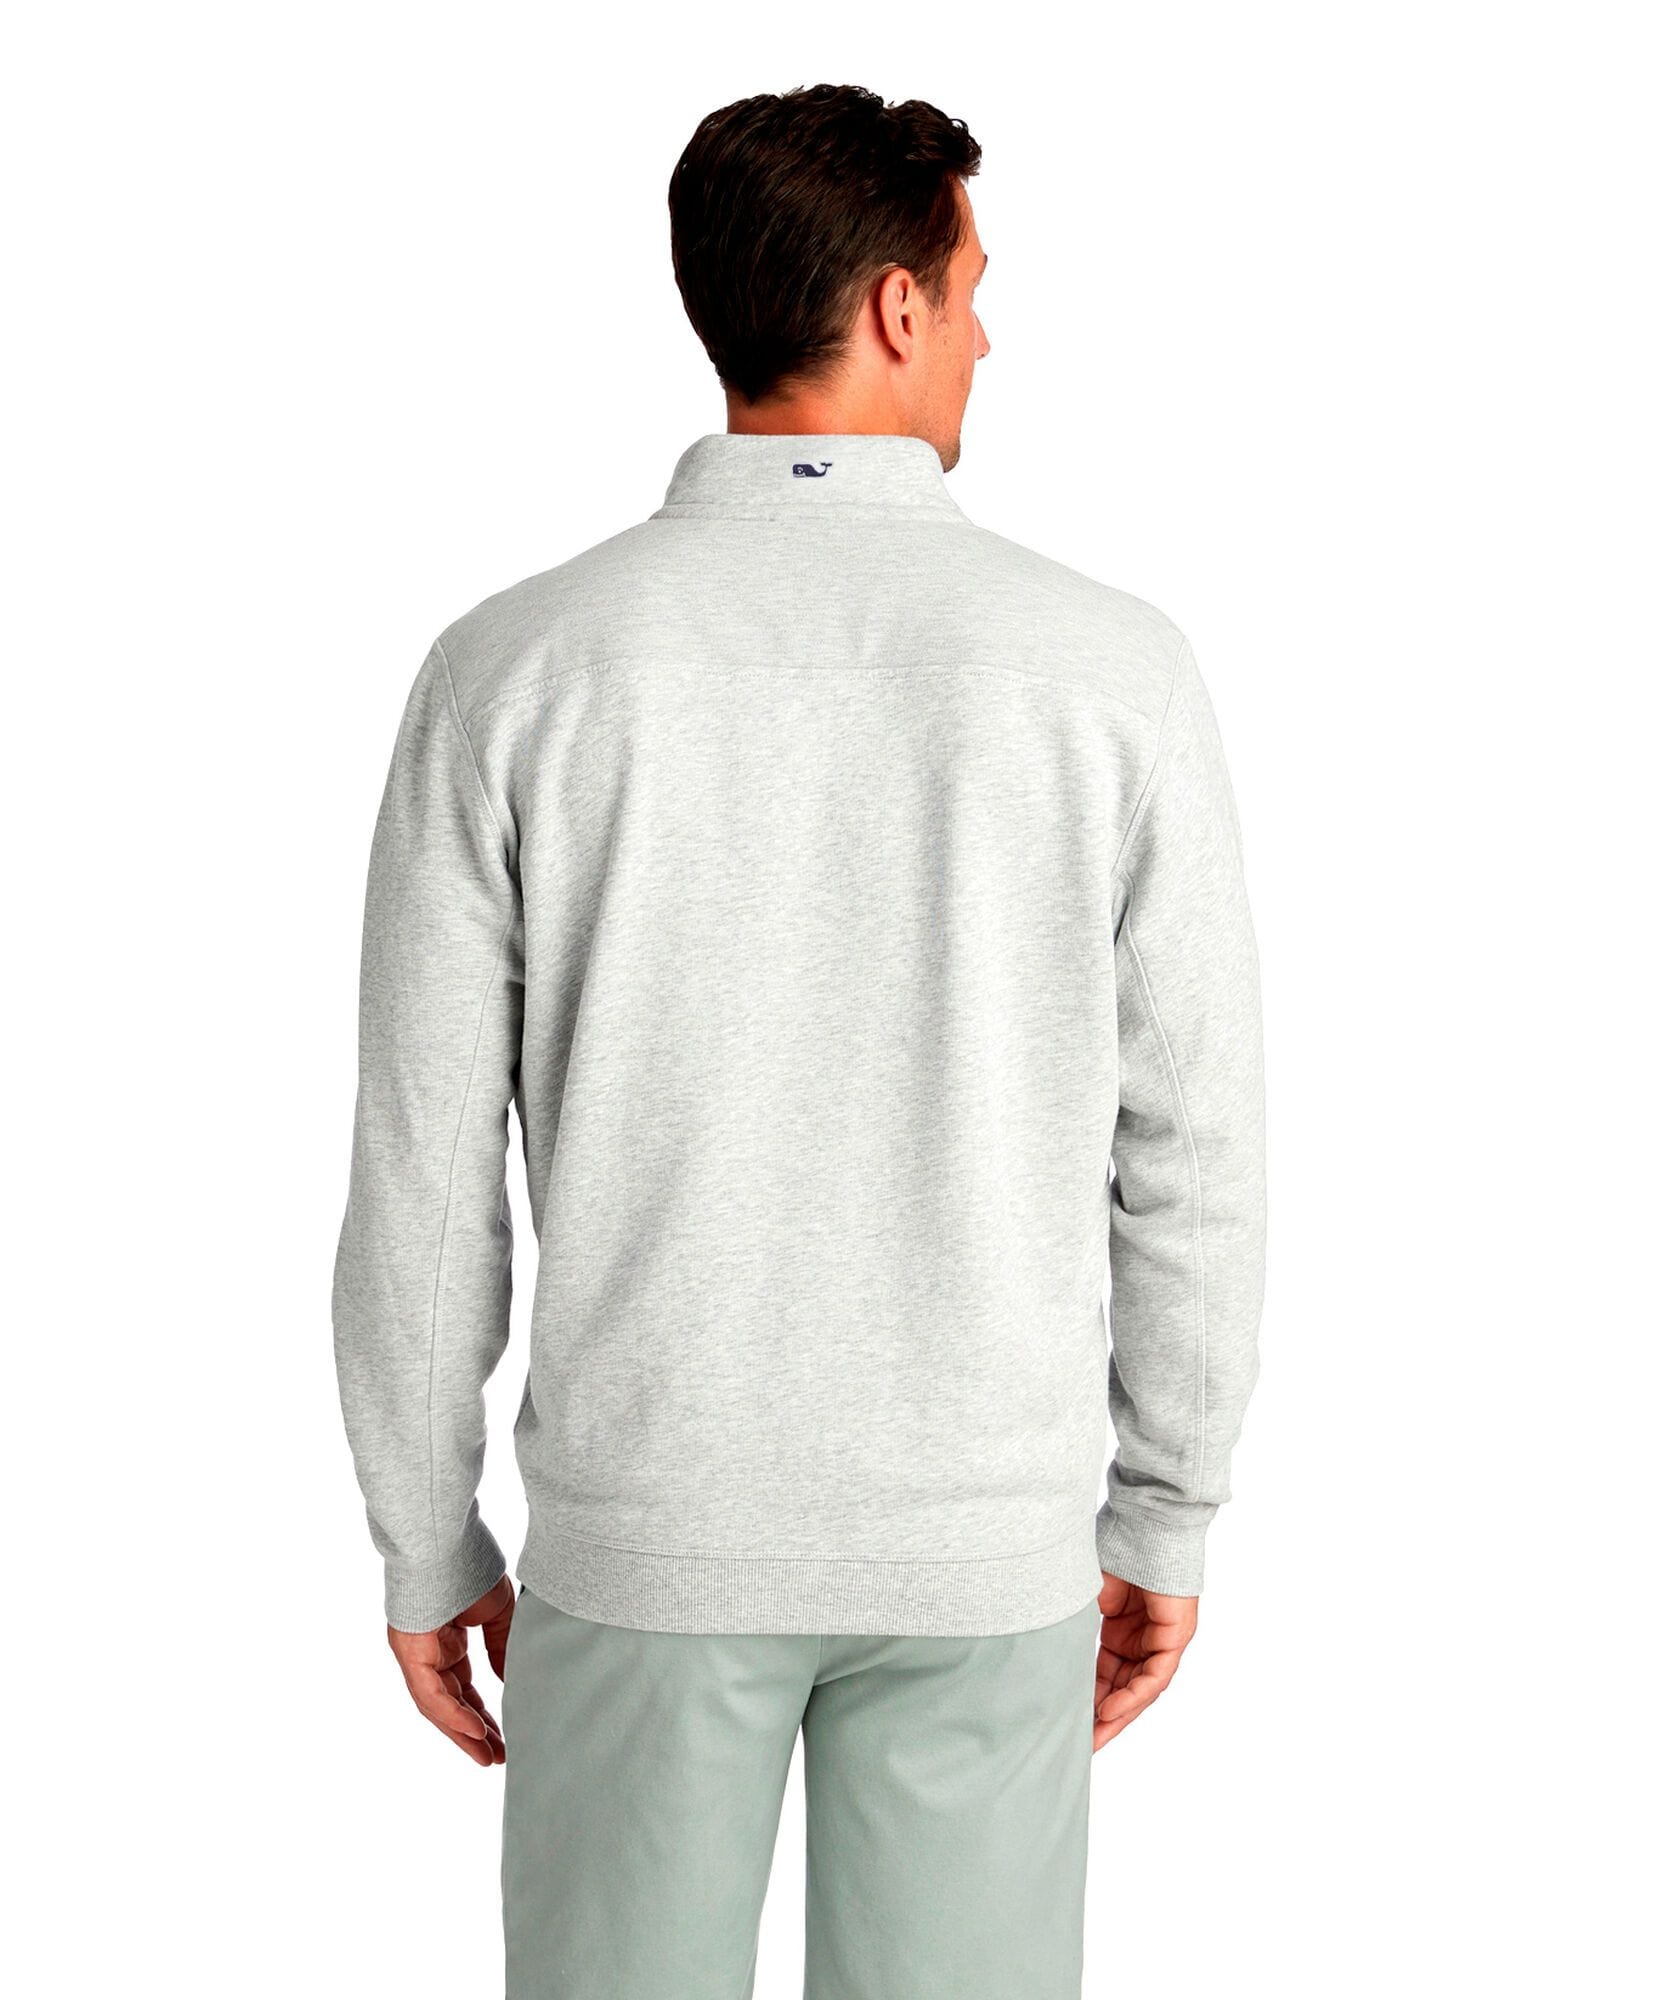 Vineyard Vines Men's Sweatshirt Vineyard Vines, Men's Collegiate Shep Shirt (Multiple Colors)